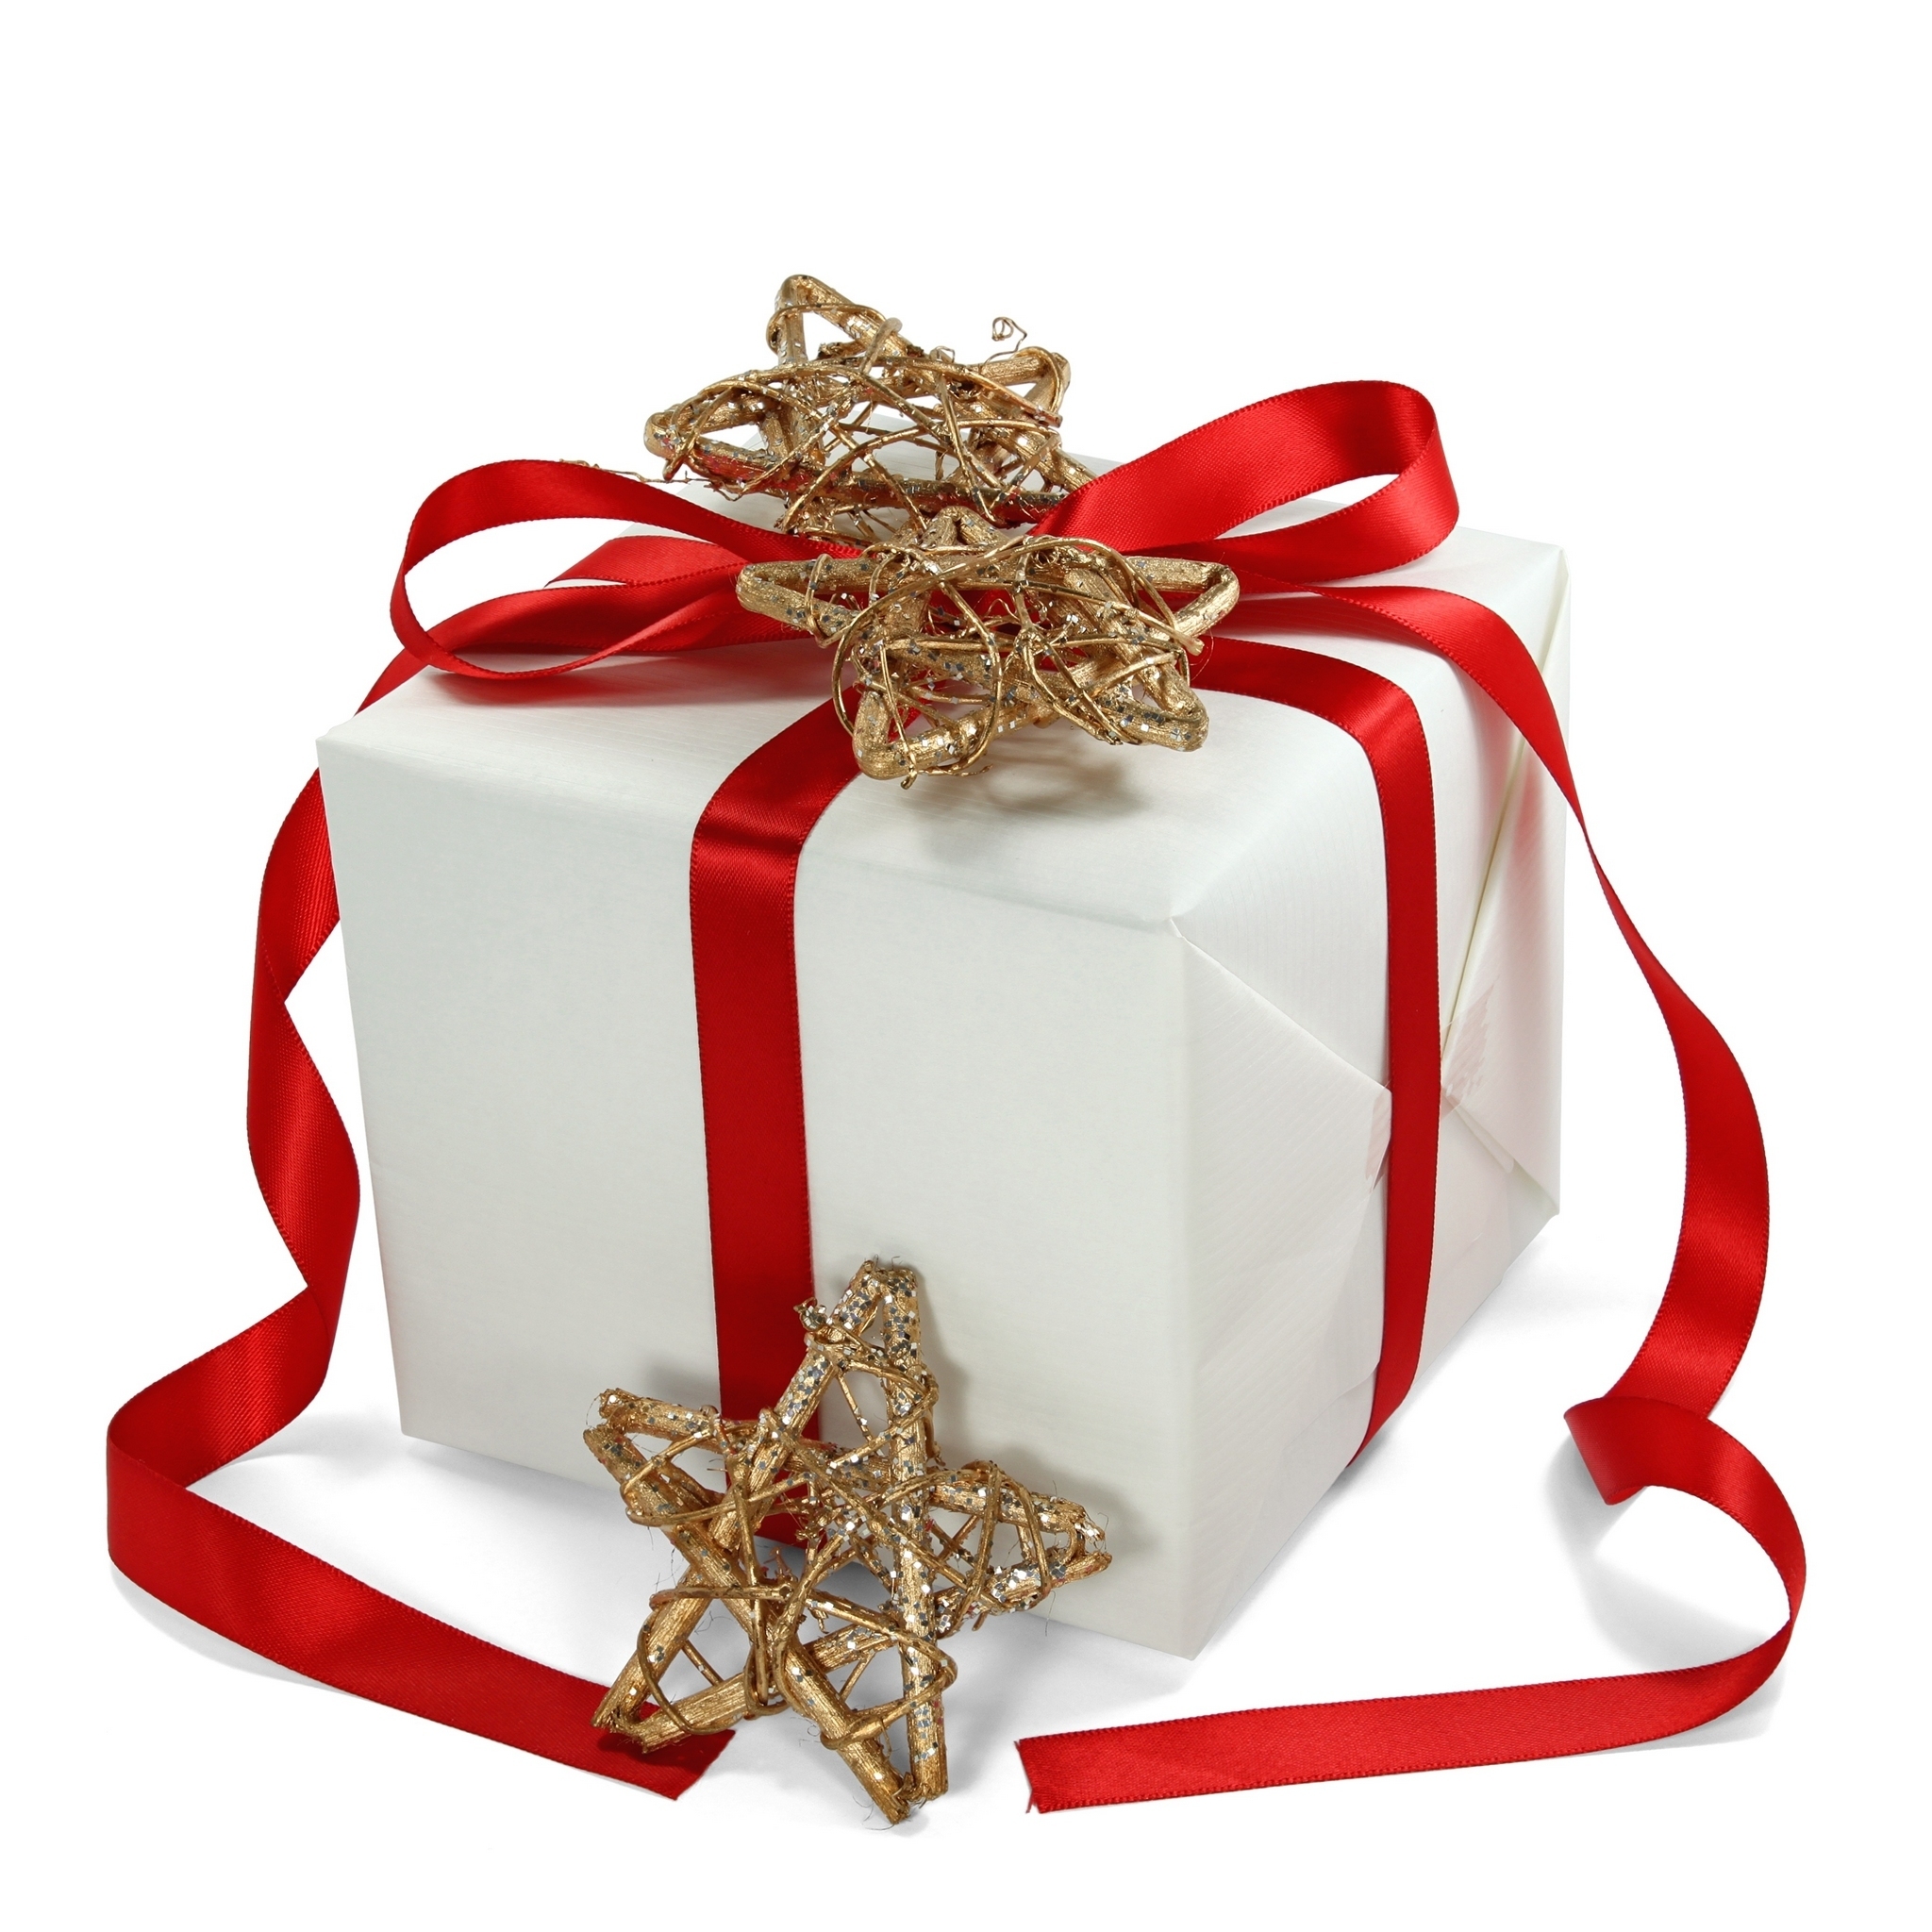 Christmas gifts - Christmas Gifts Photo (22231228) - Fanpop